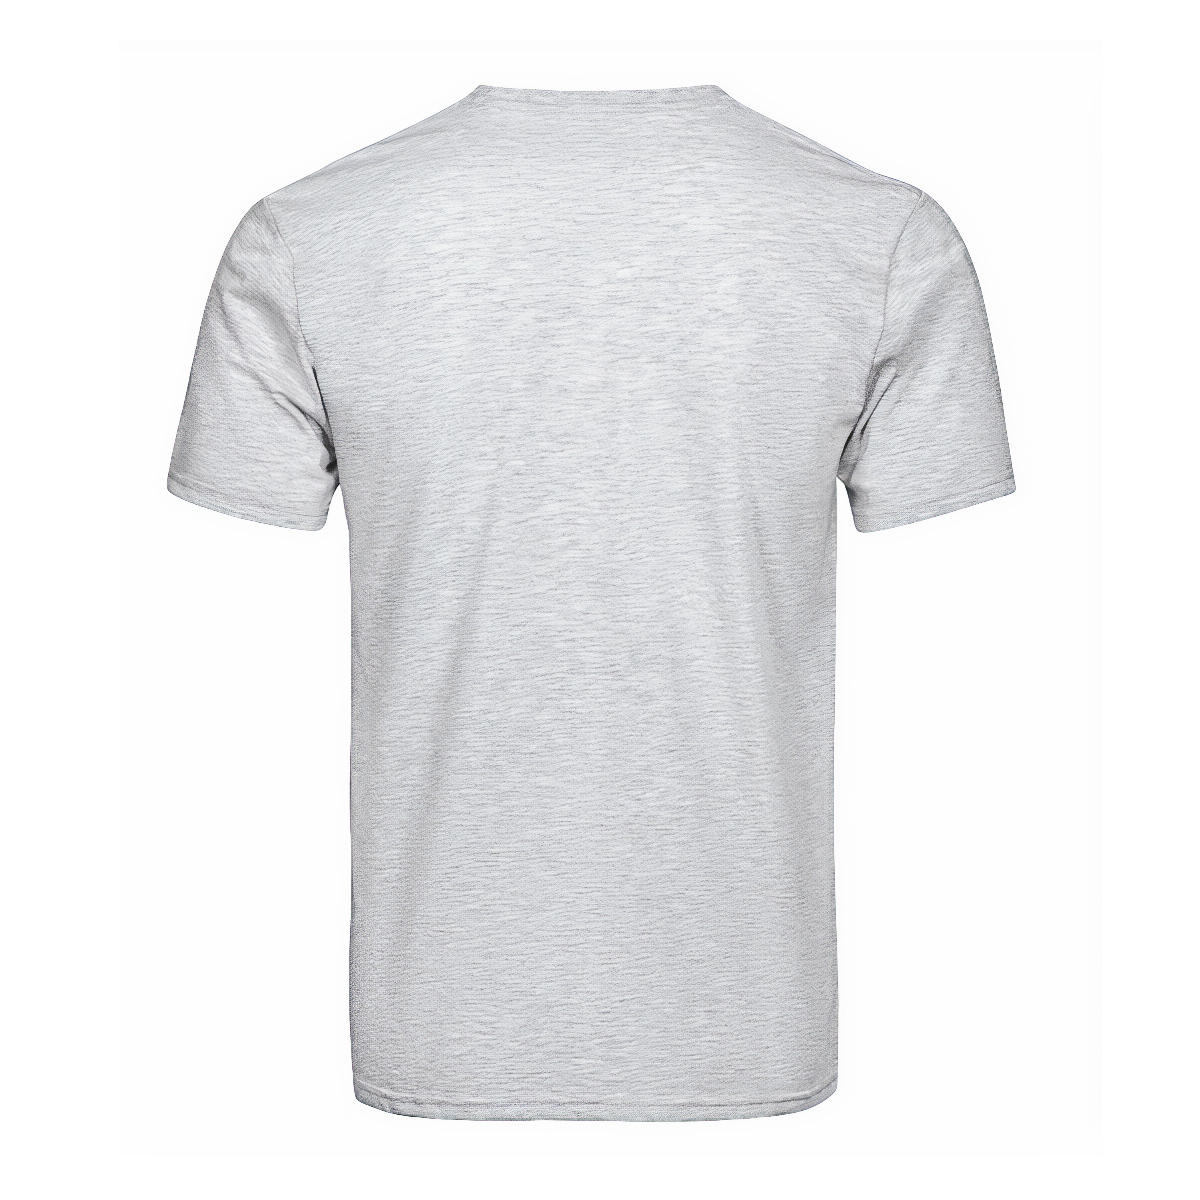 Bannerman Tartan Crest T-shirt - I'm not yelling style